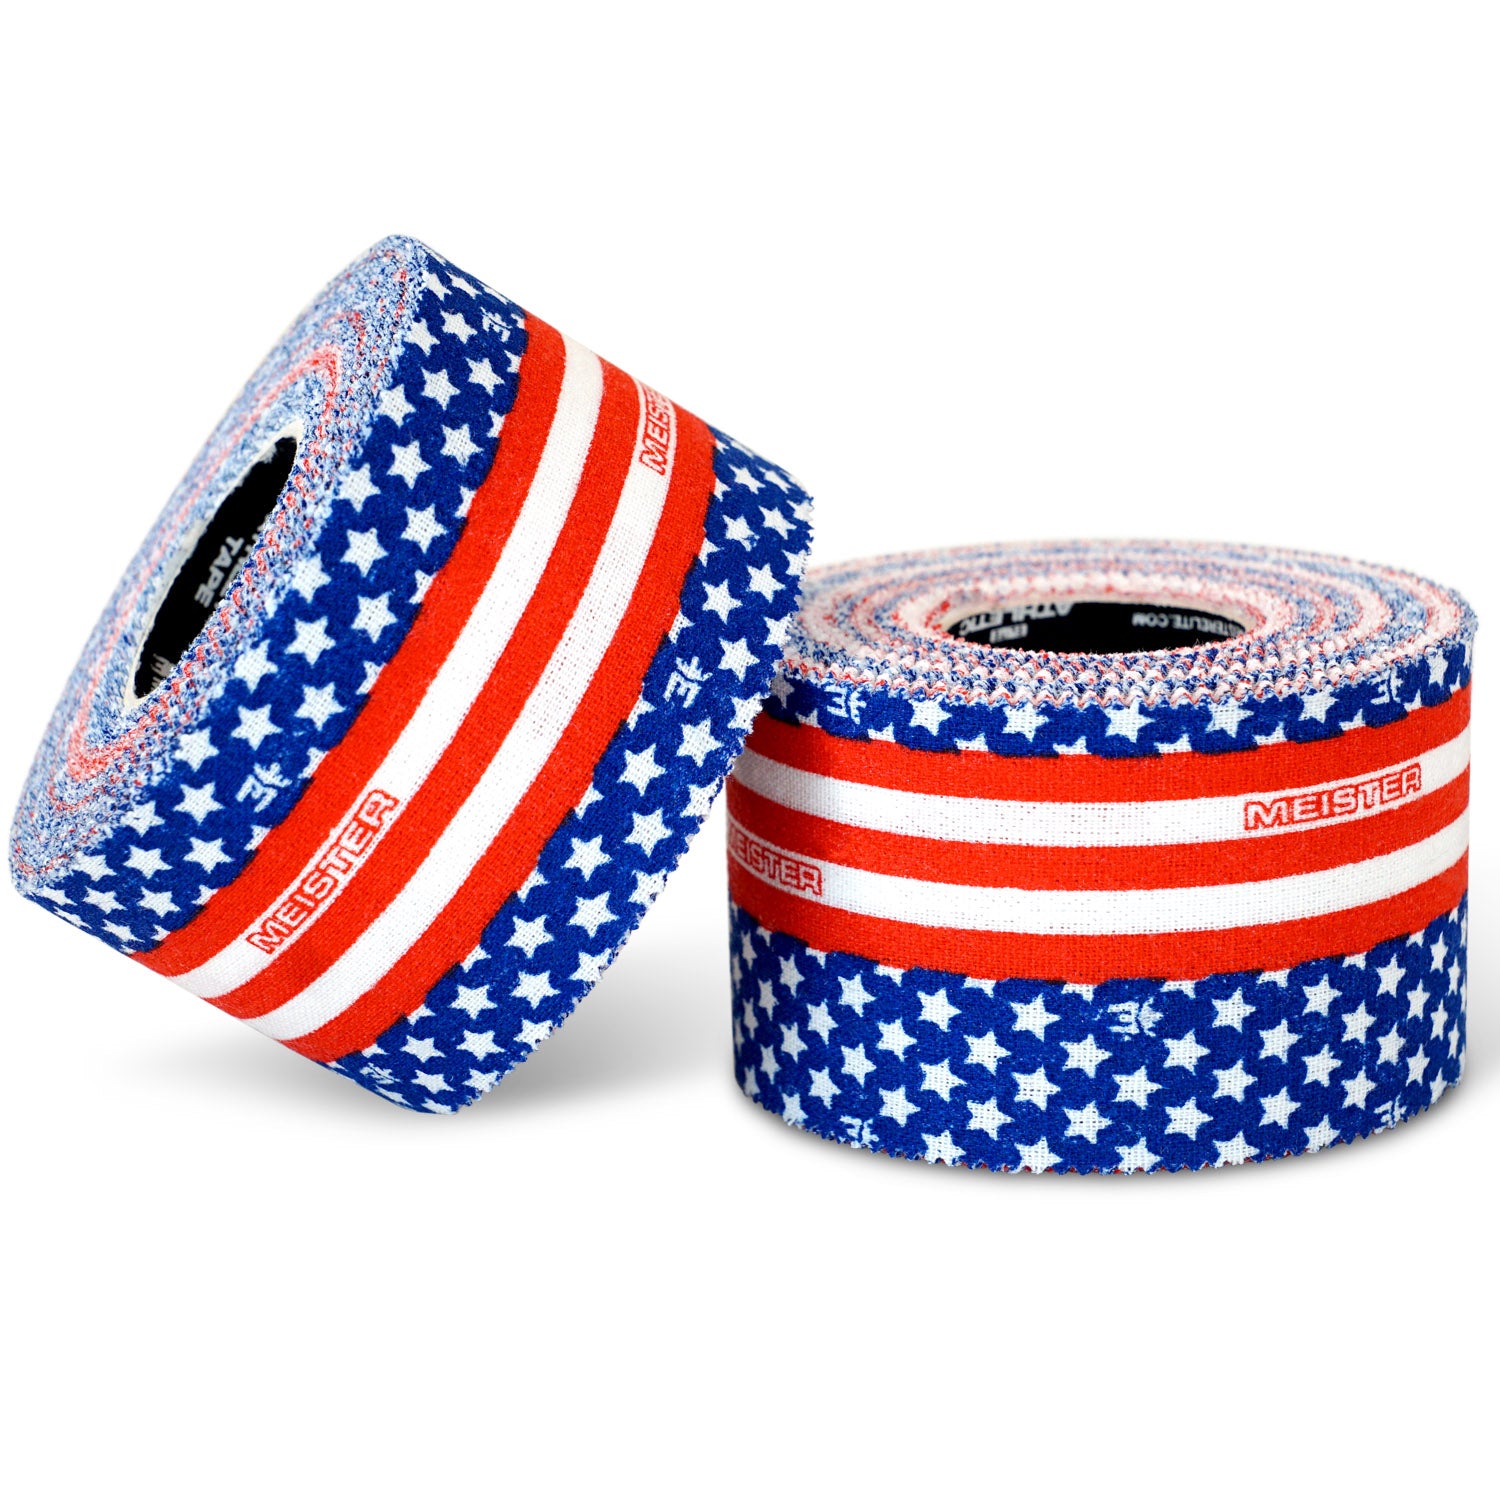 Meister Elite Porous Athletic Tape - 2 Roll Pack - American Flag